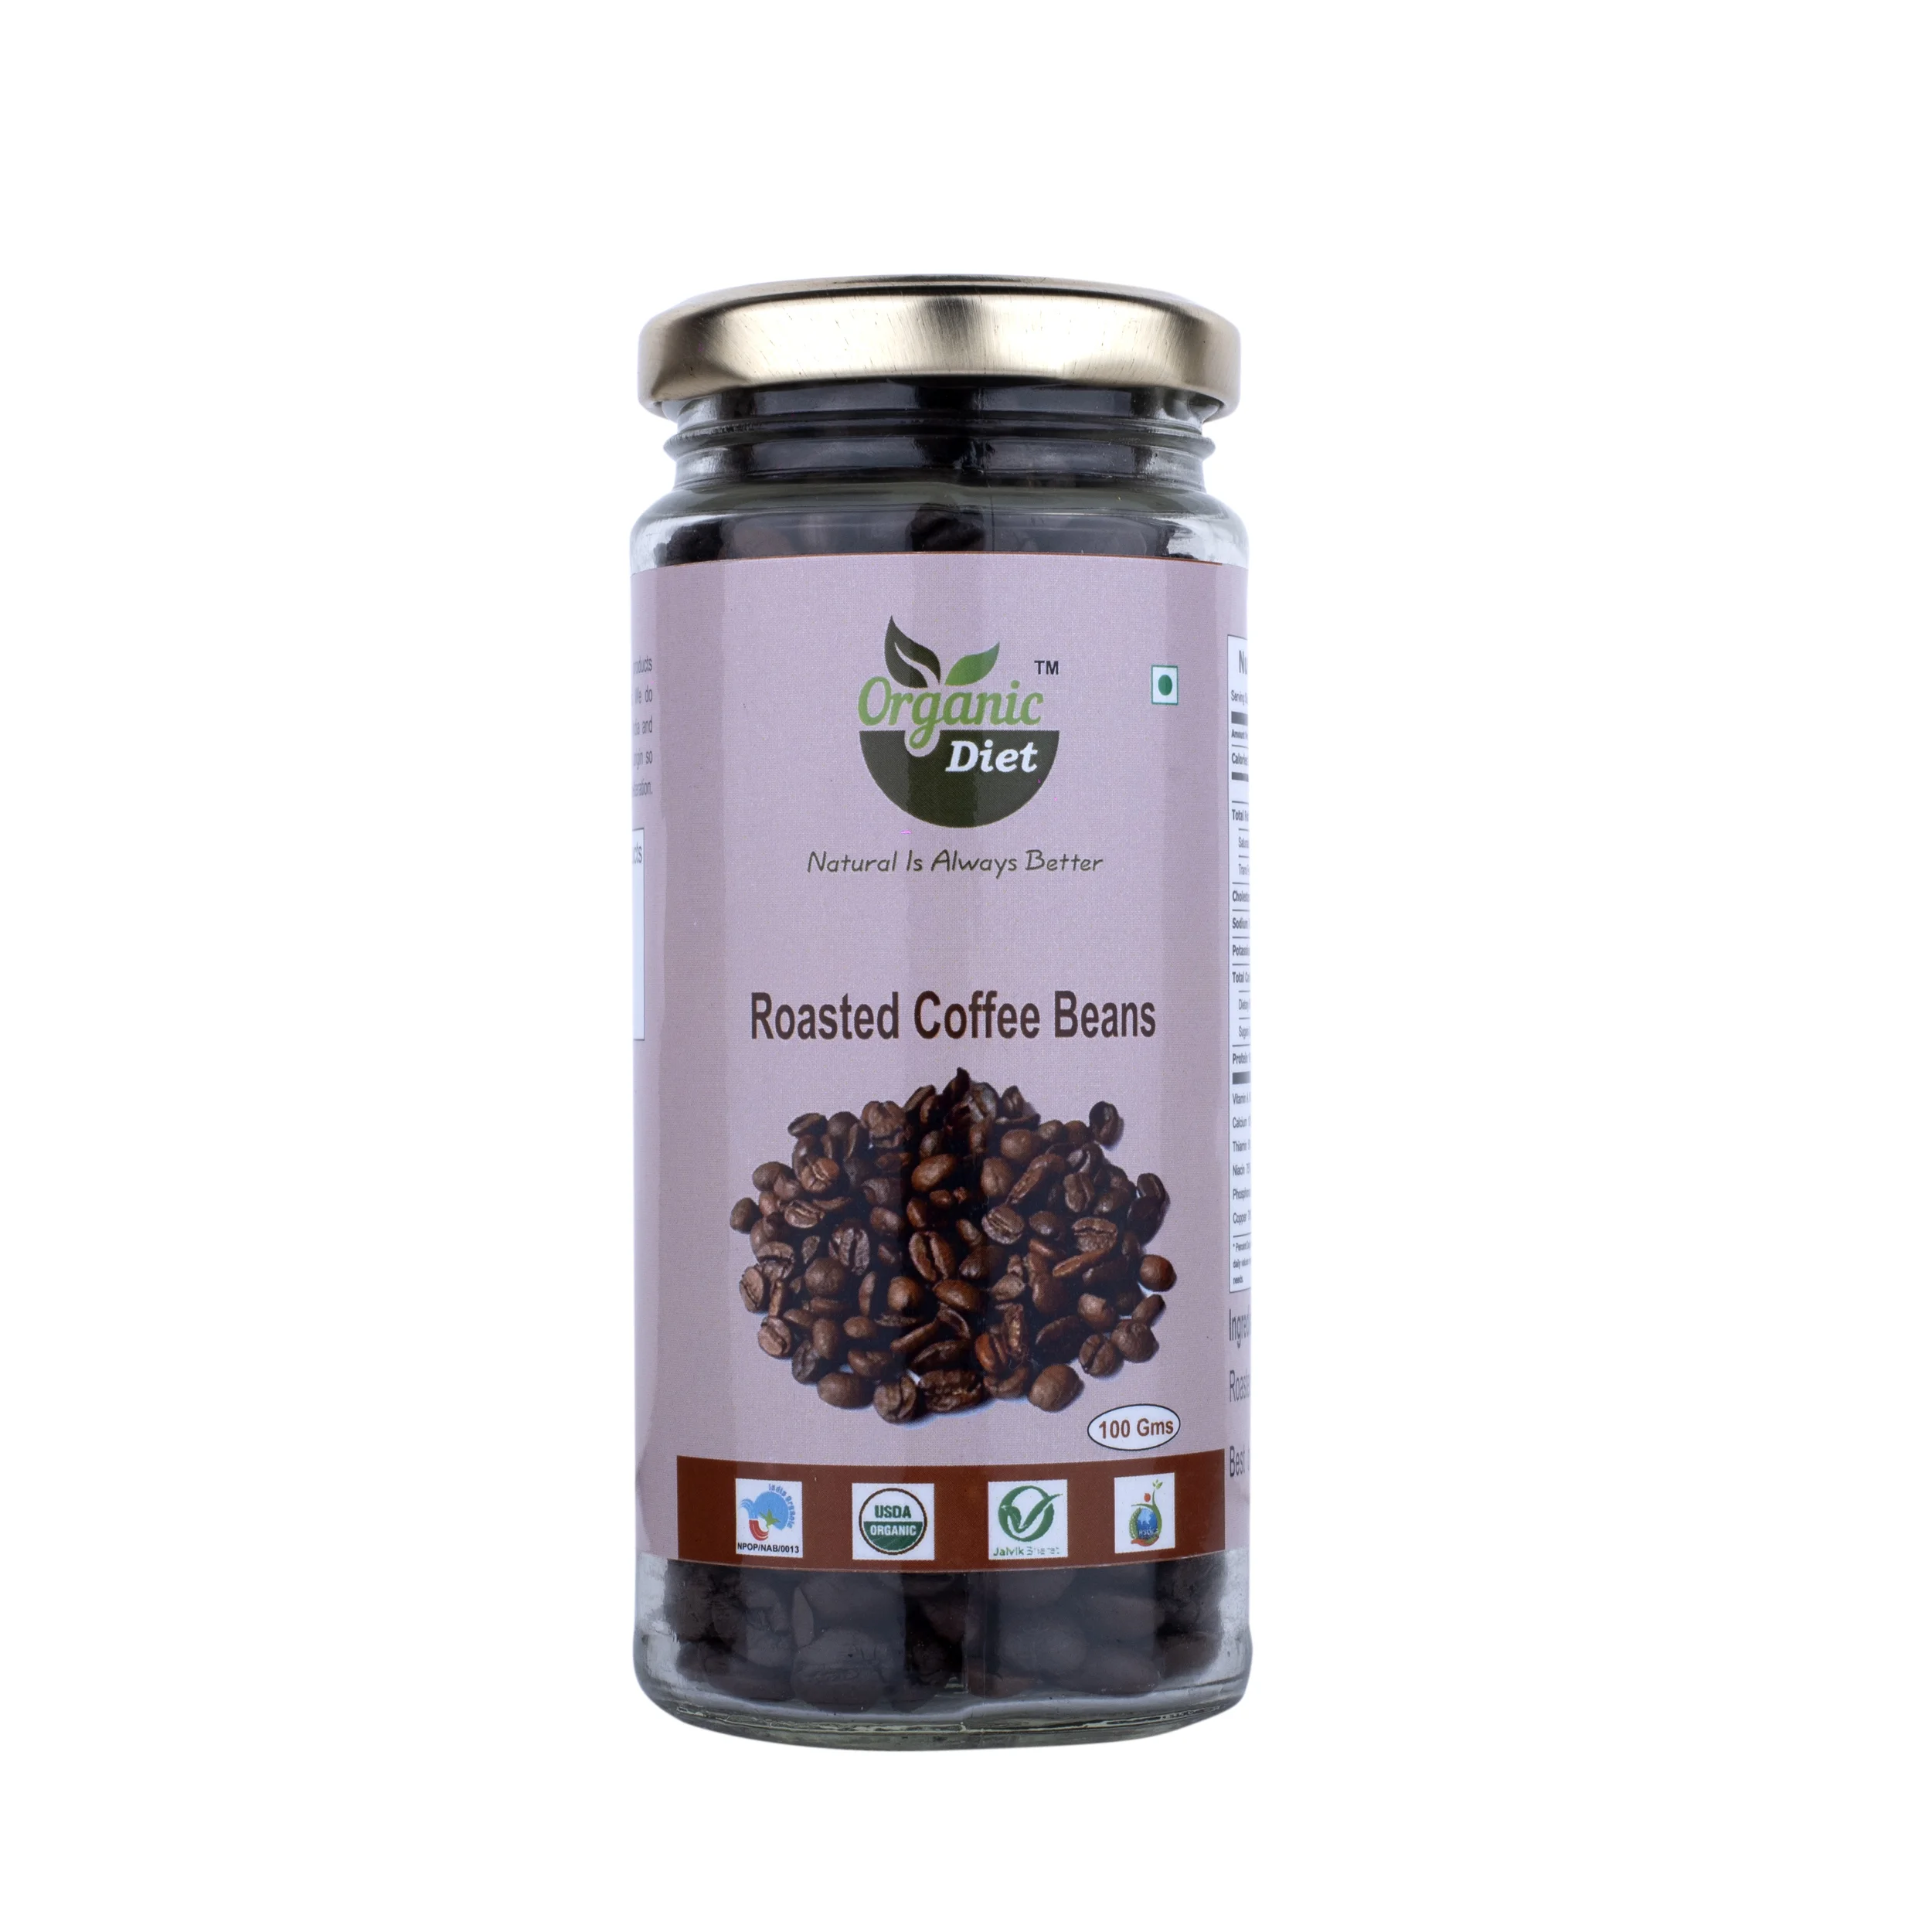 Organic Diet Organic Roasted Coffee Beans, 100 Gram